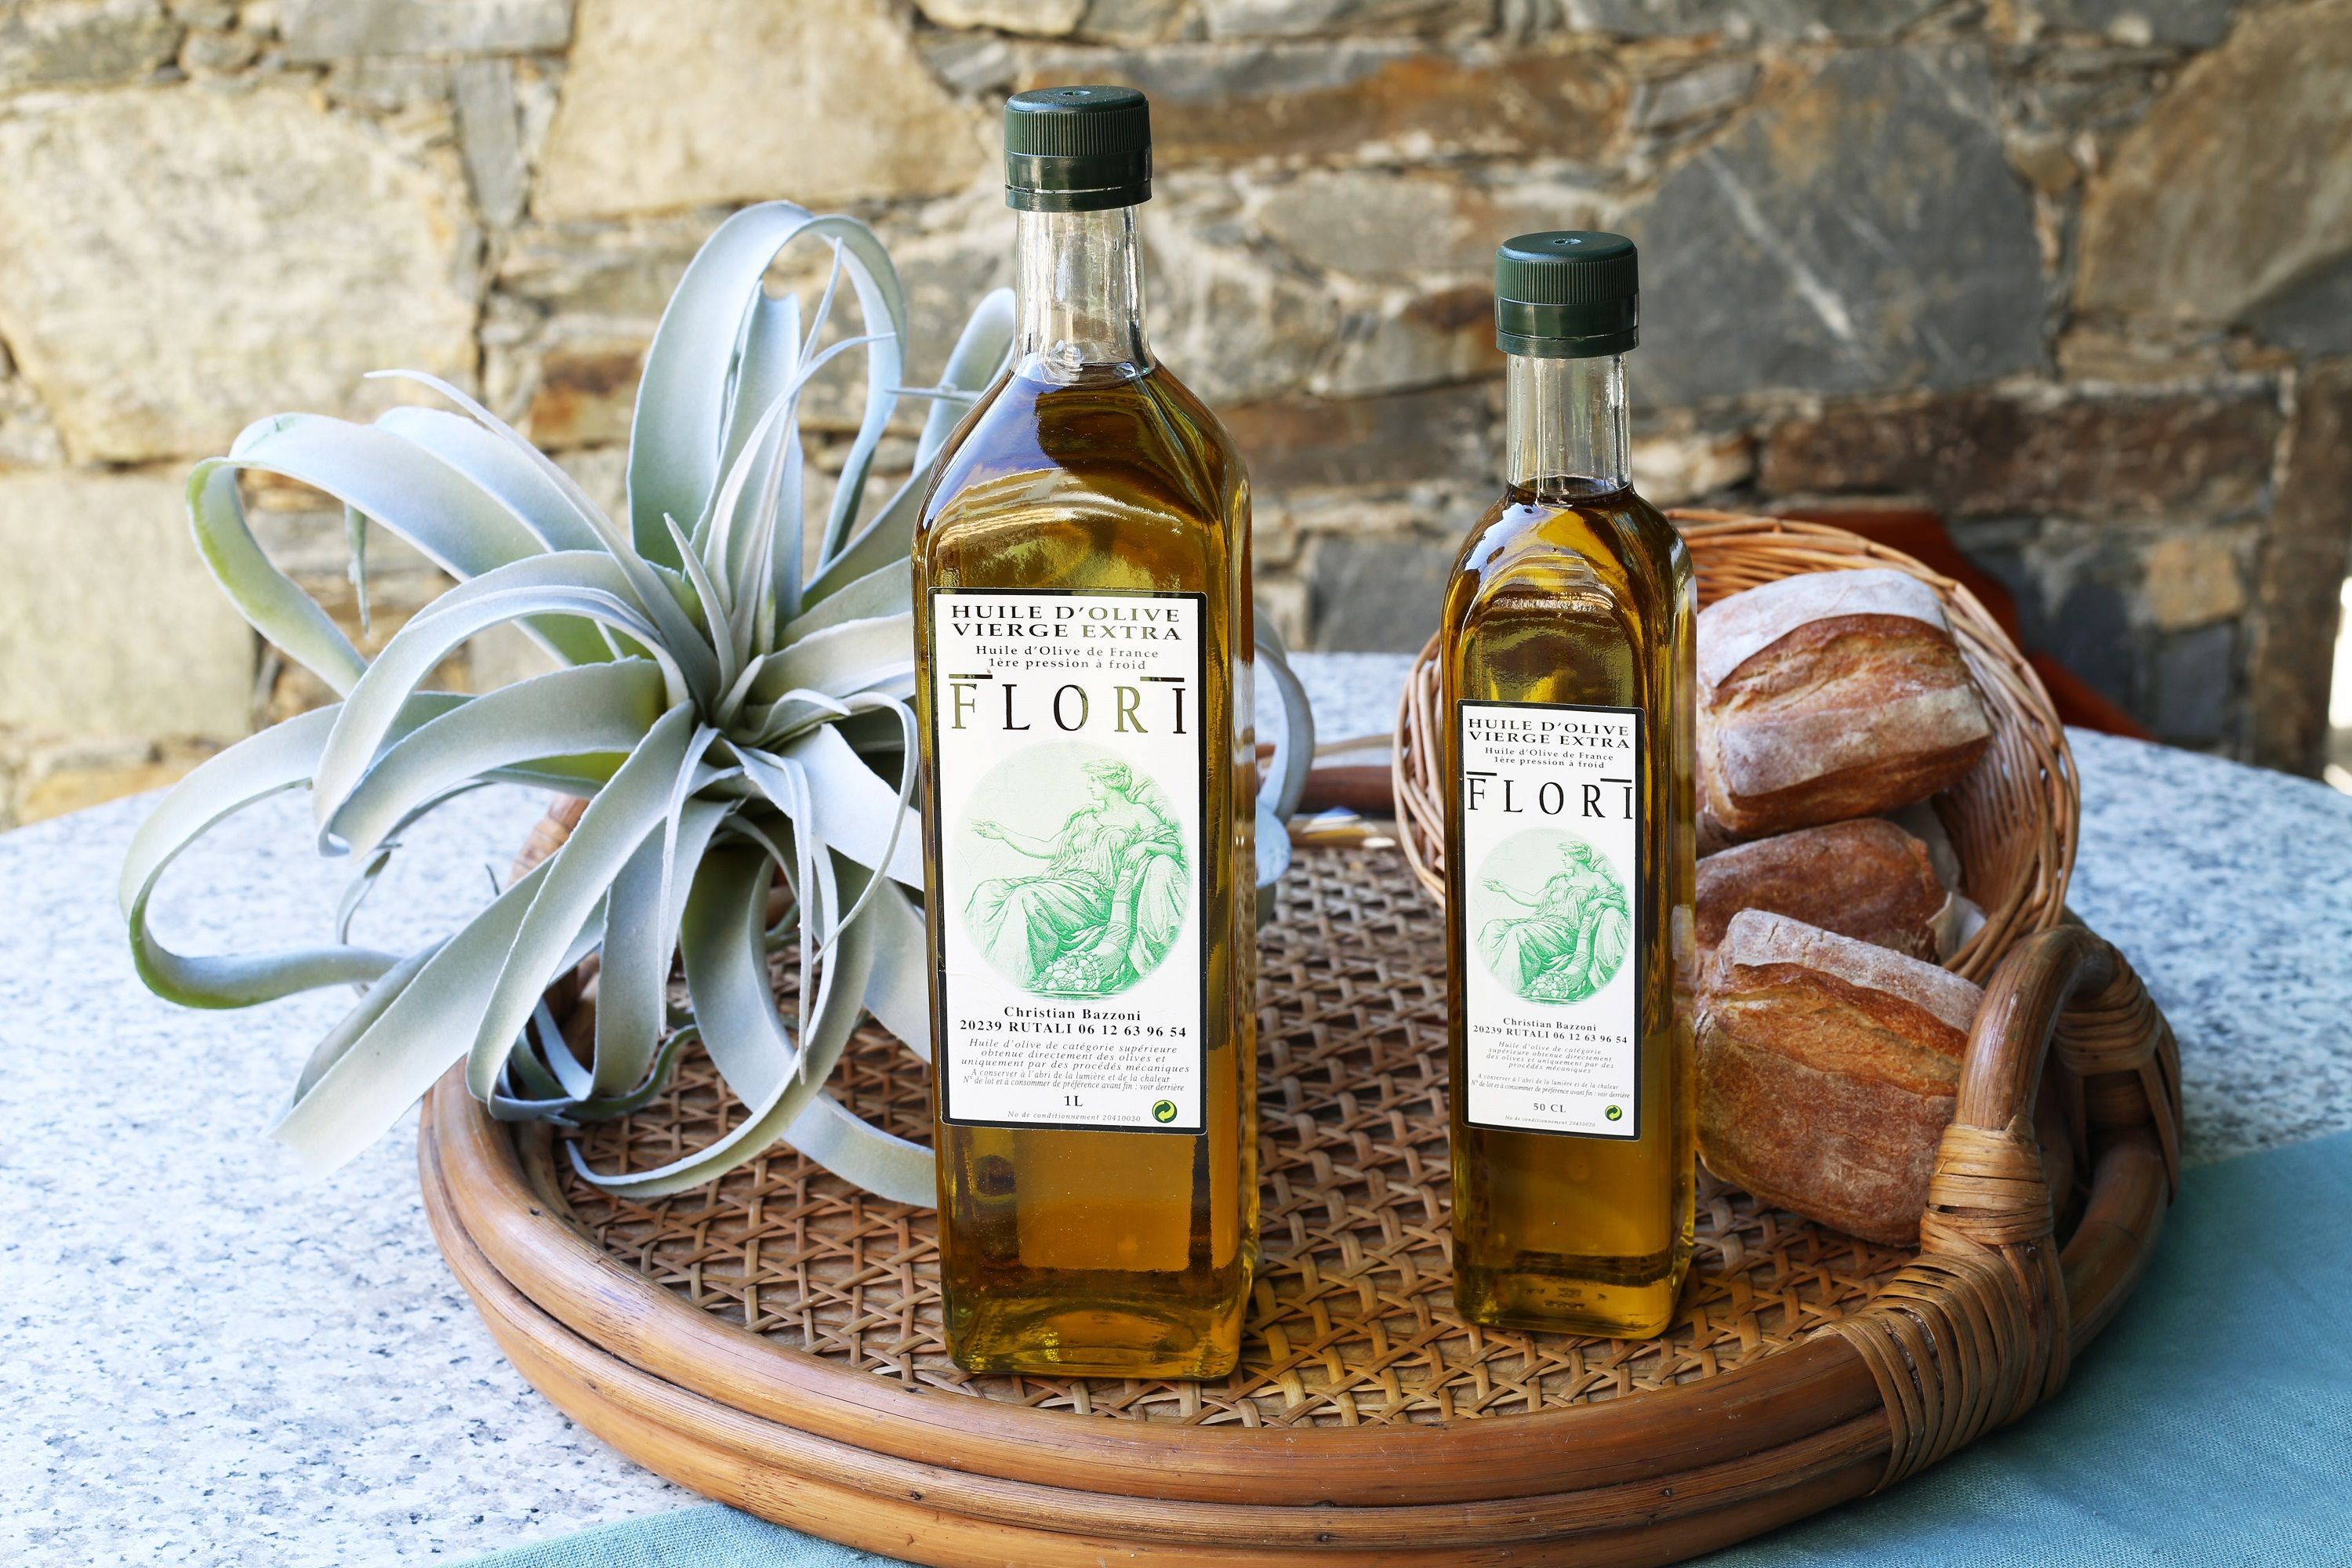 huile-olive-vierge